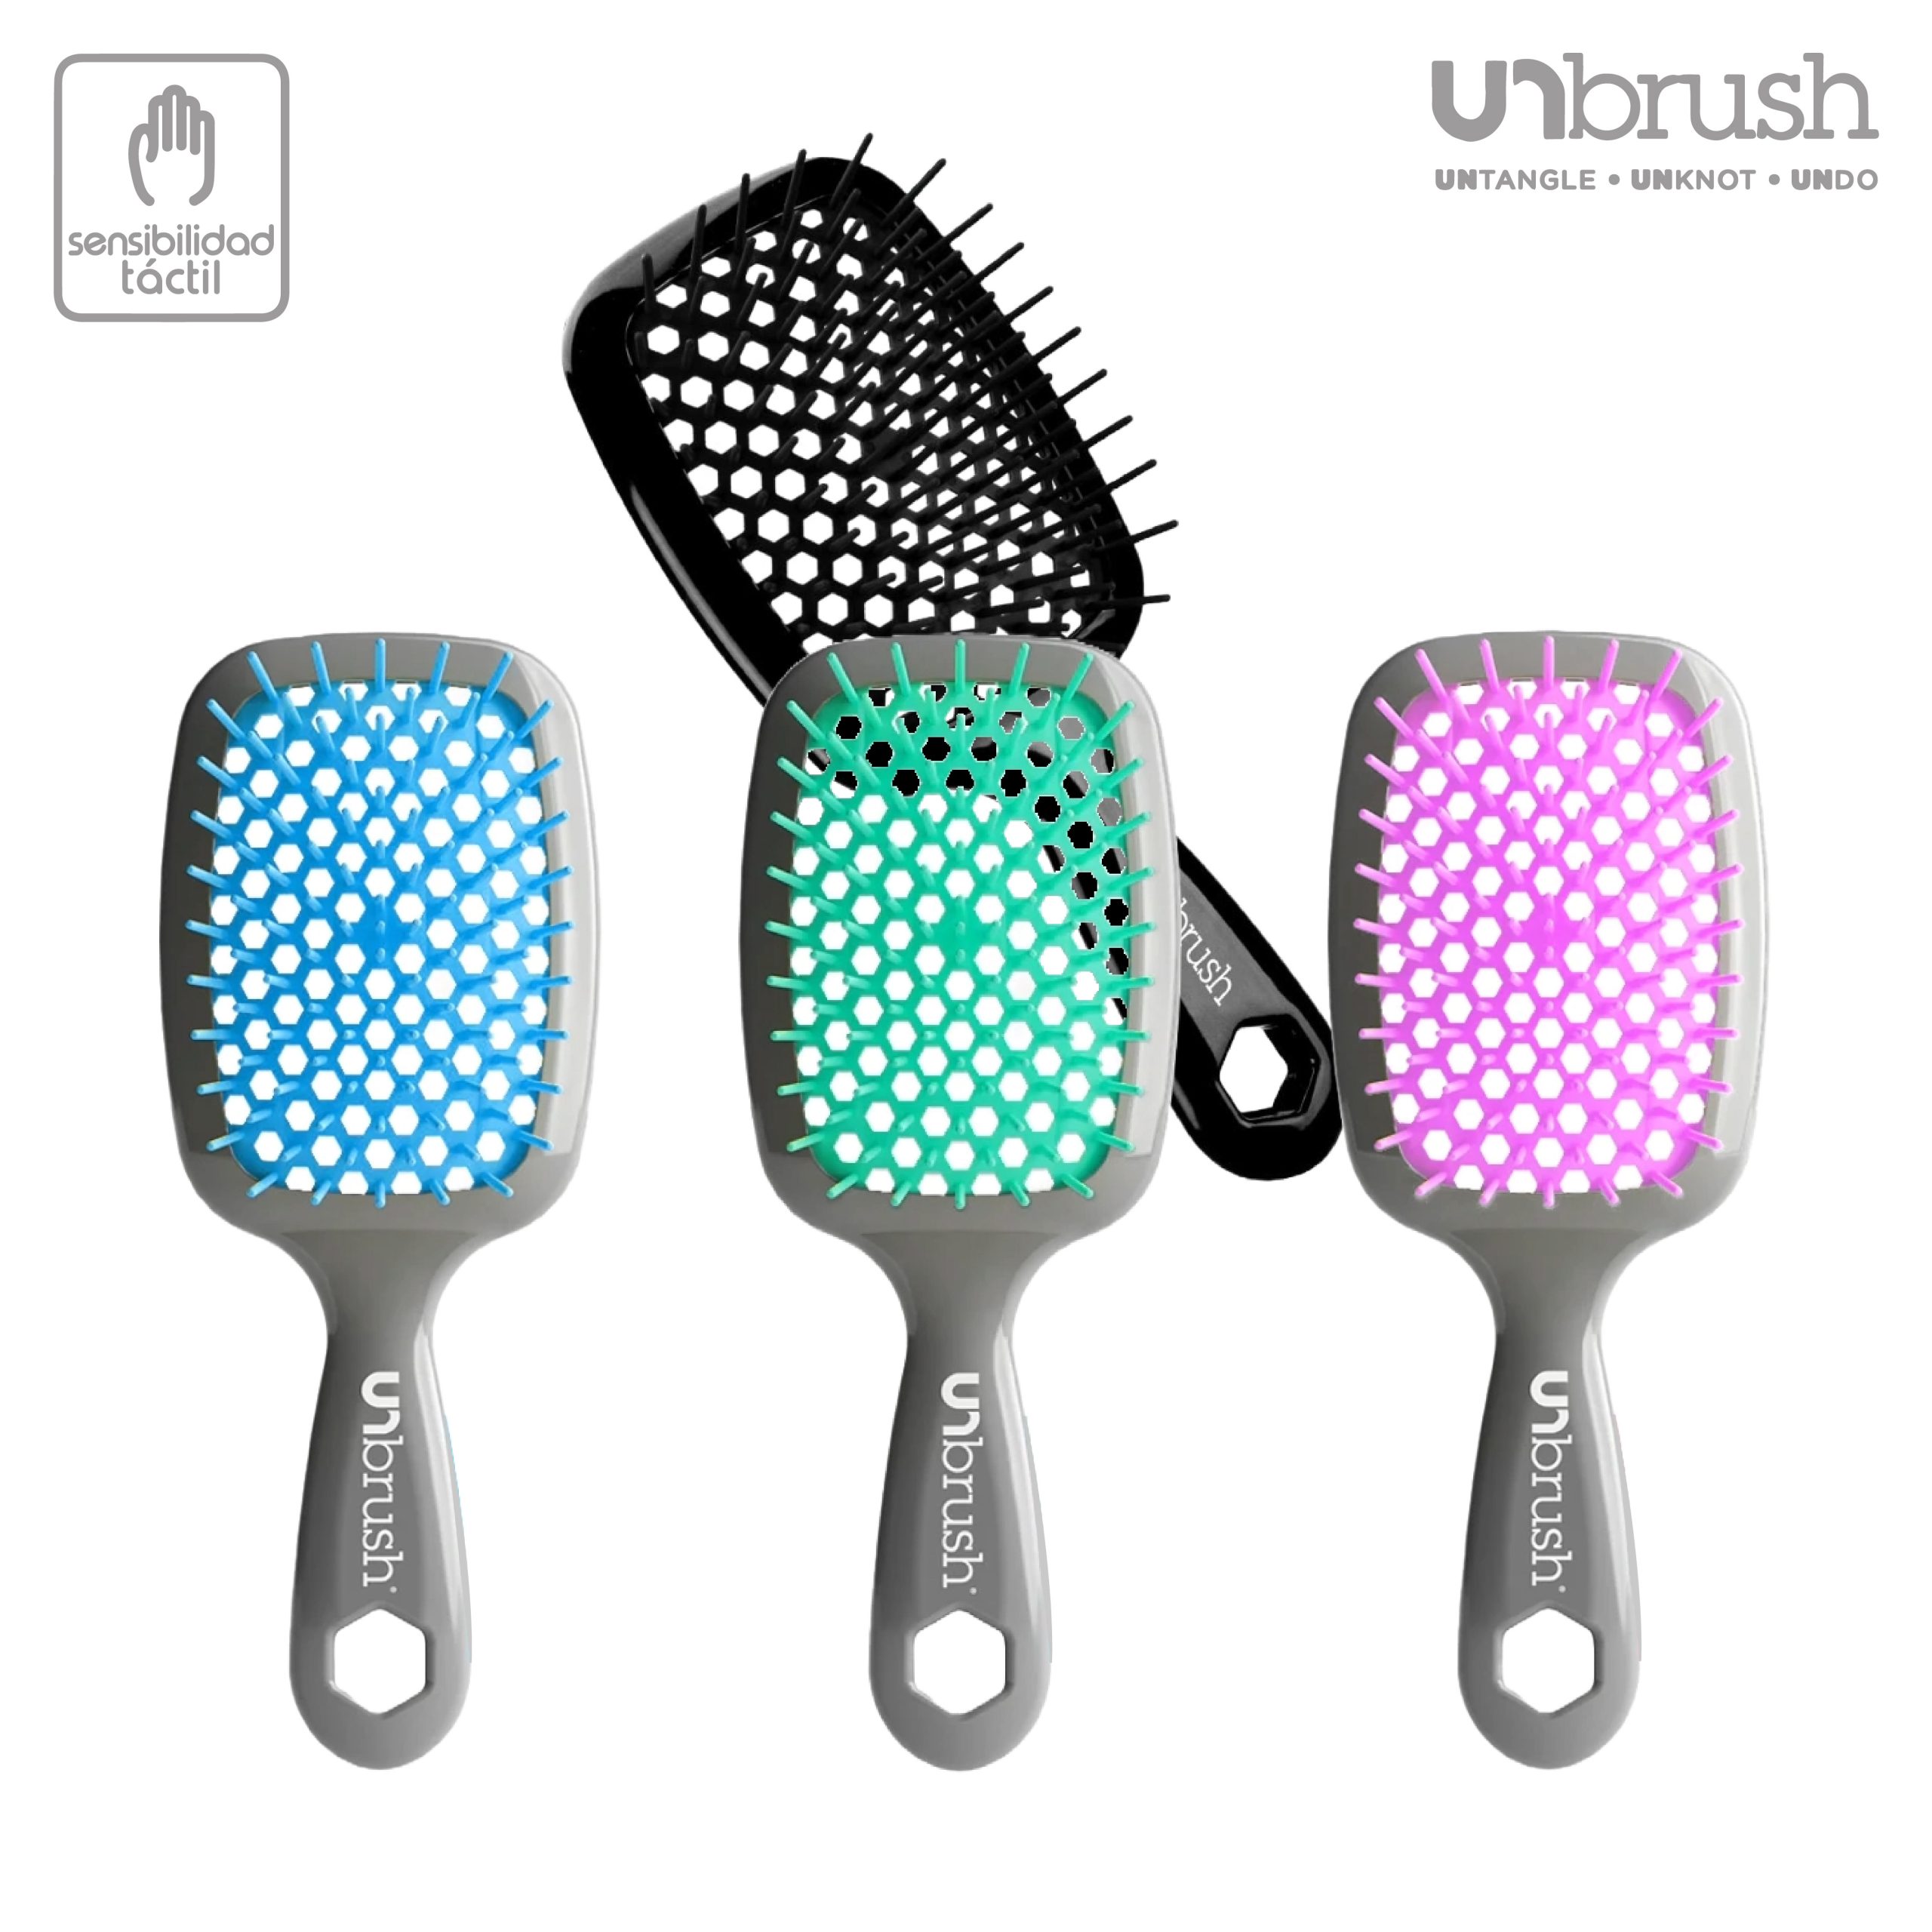 UNbrush cepillo desenredante autismo sensibilidad tactil sin dolor detangling